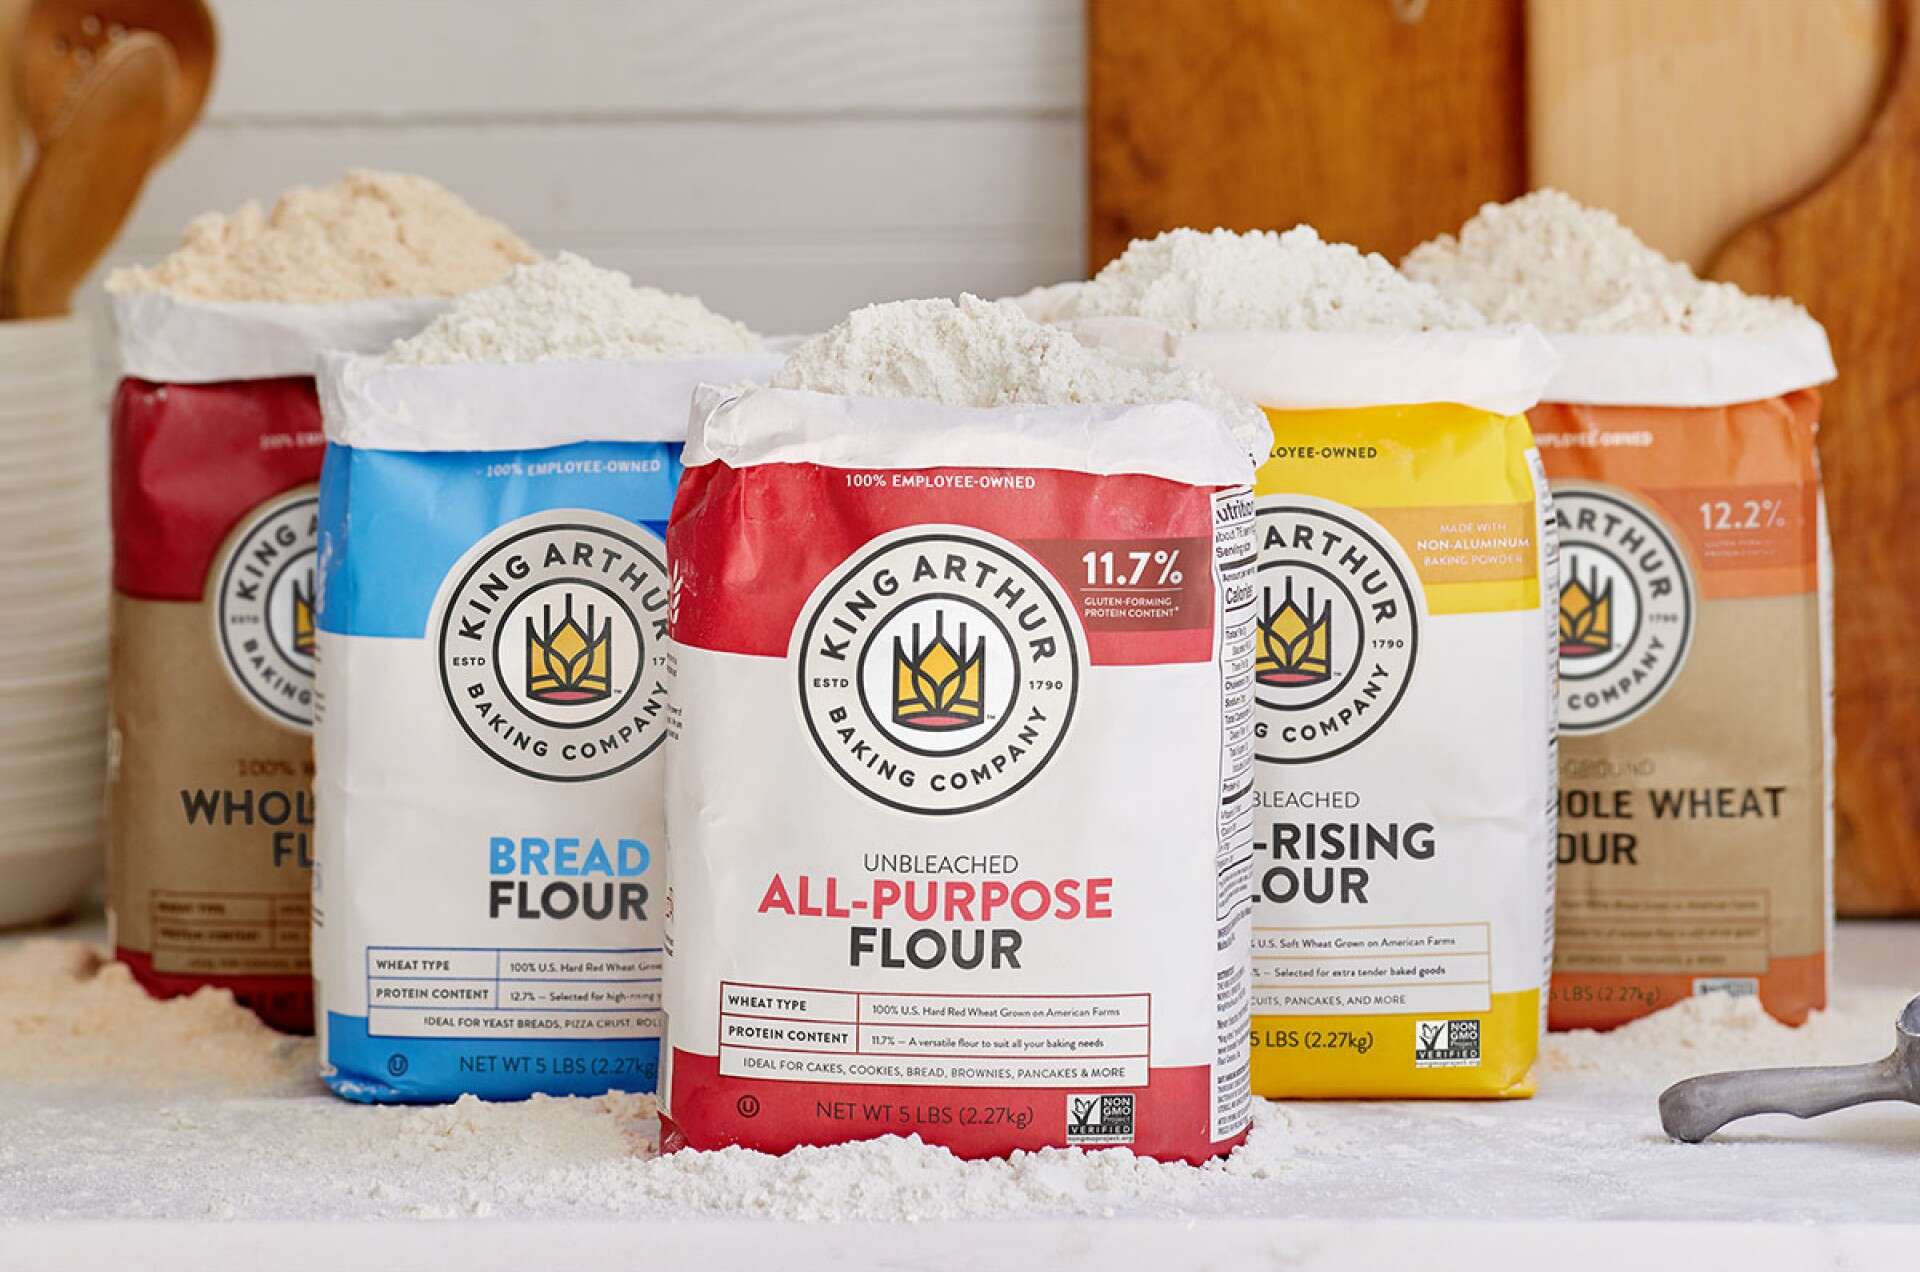 Bags of King Arthur flour featuring the new King Arthur Baking Company logo